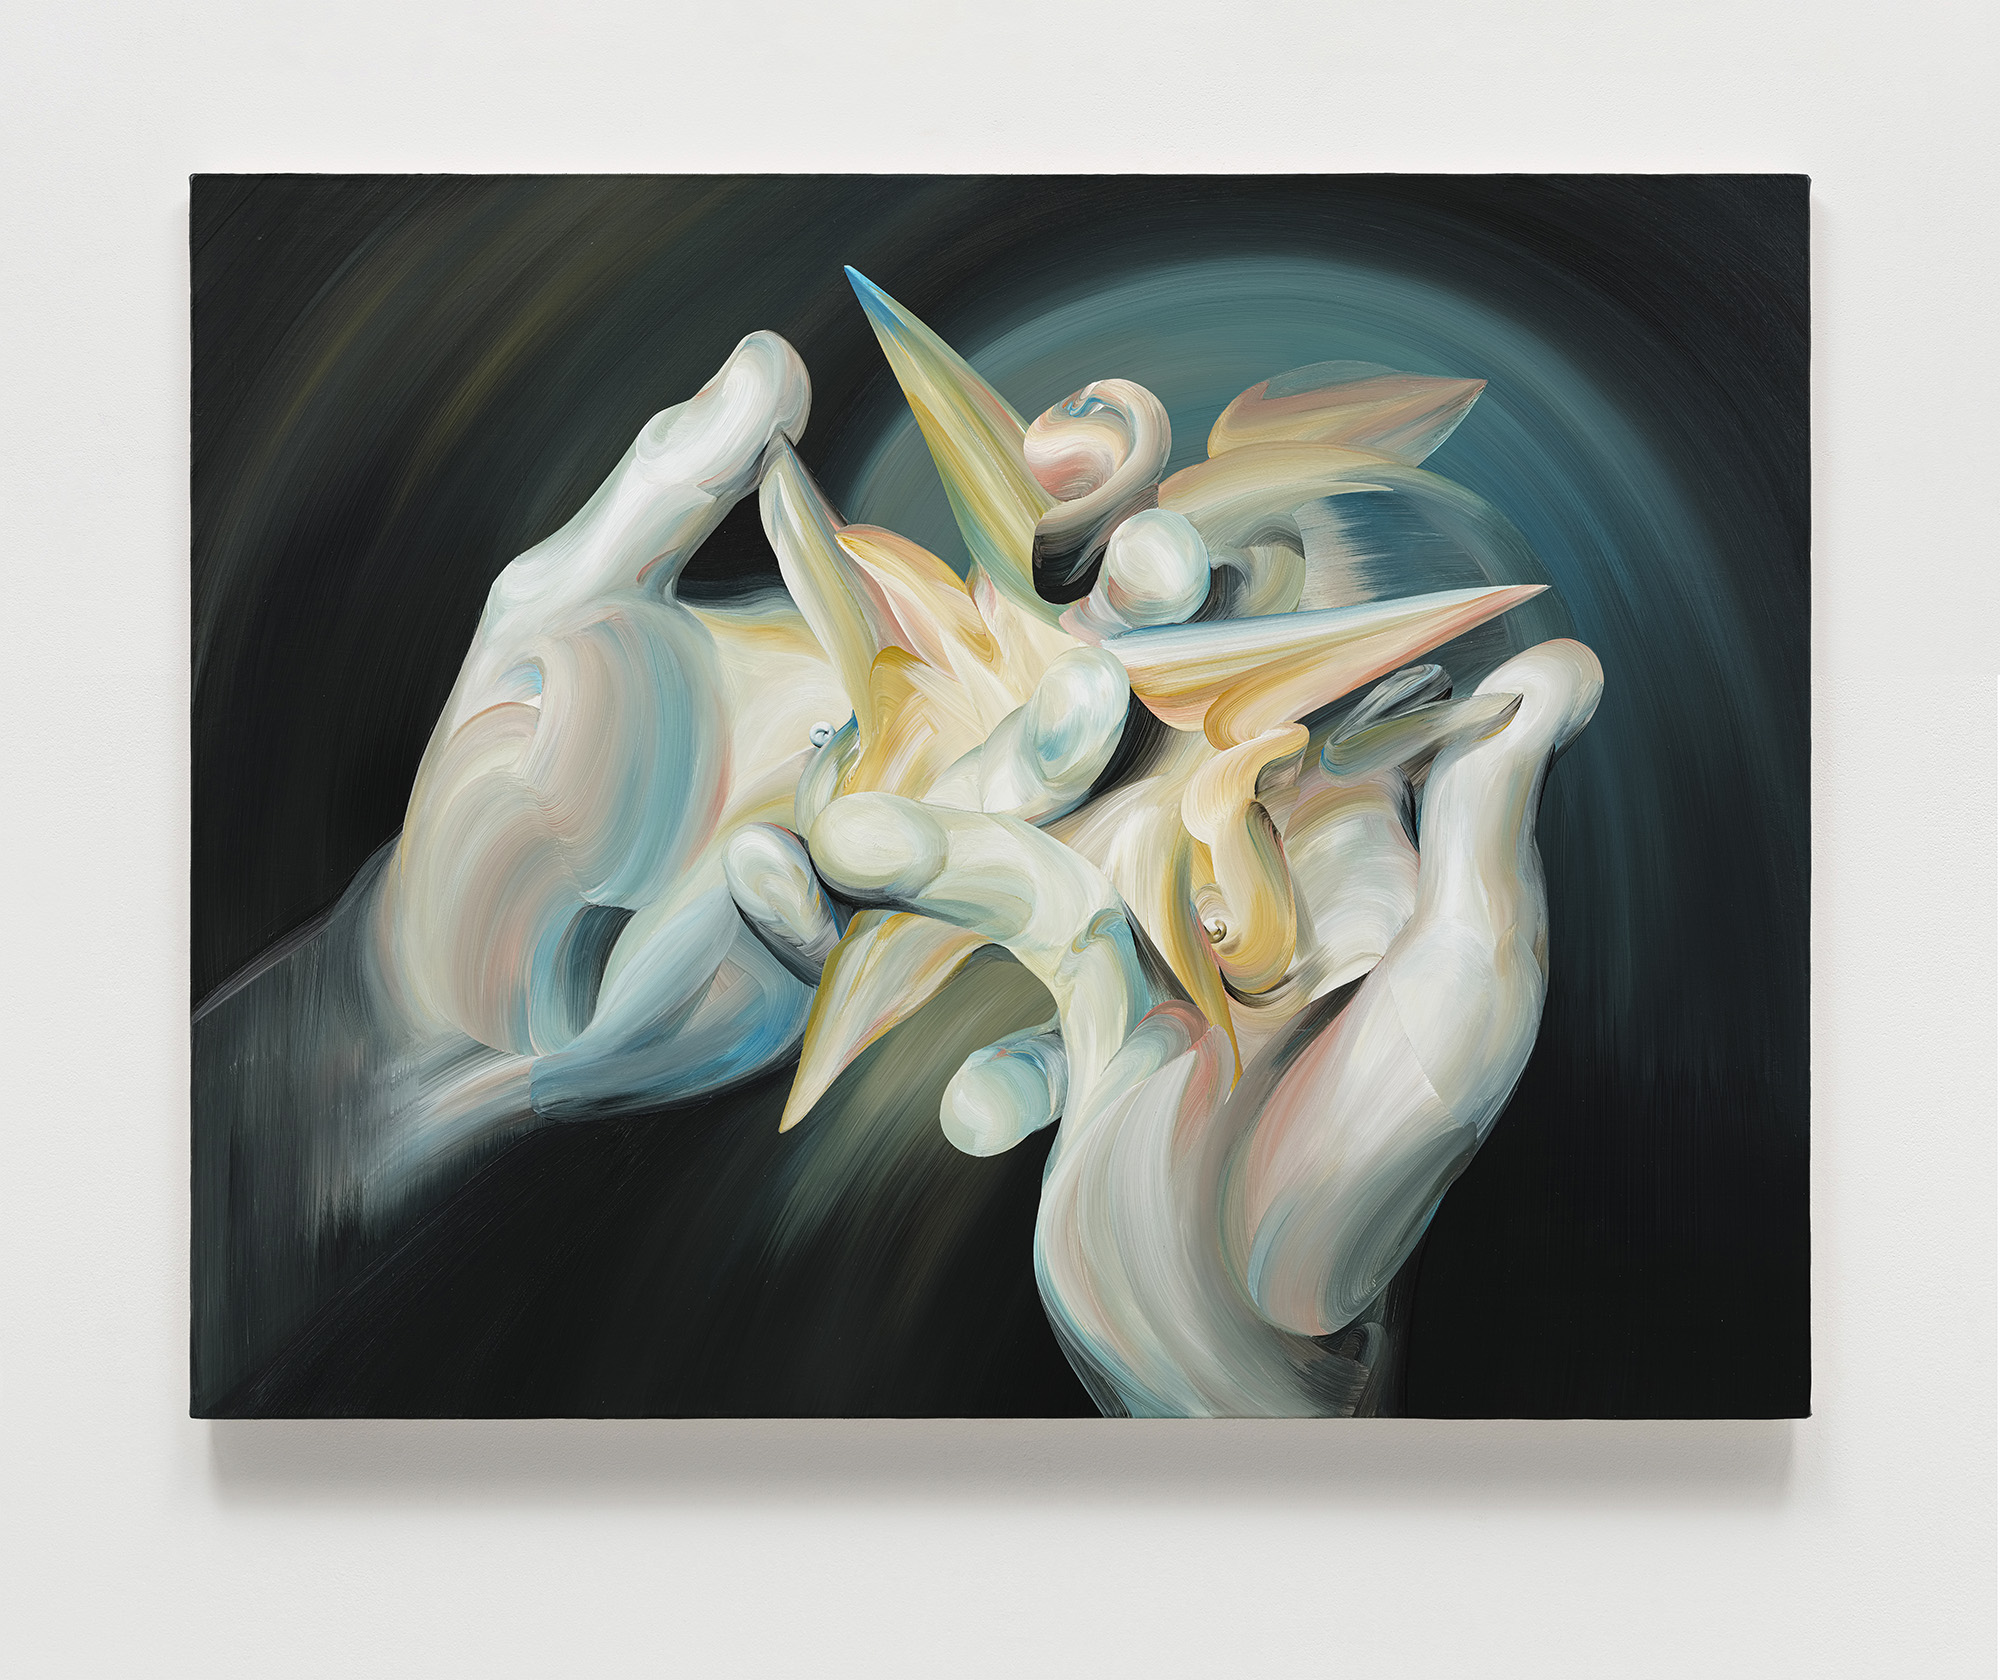 Huang Ko Wei, Wedge, 2022, acrylic on canvas, 50 x 65 cm